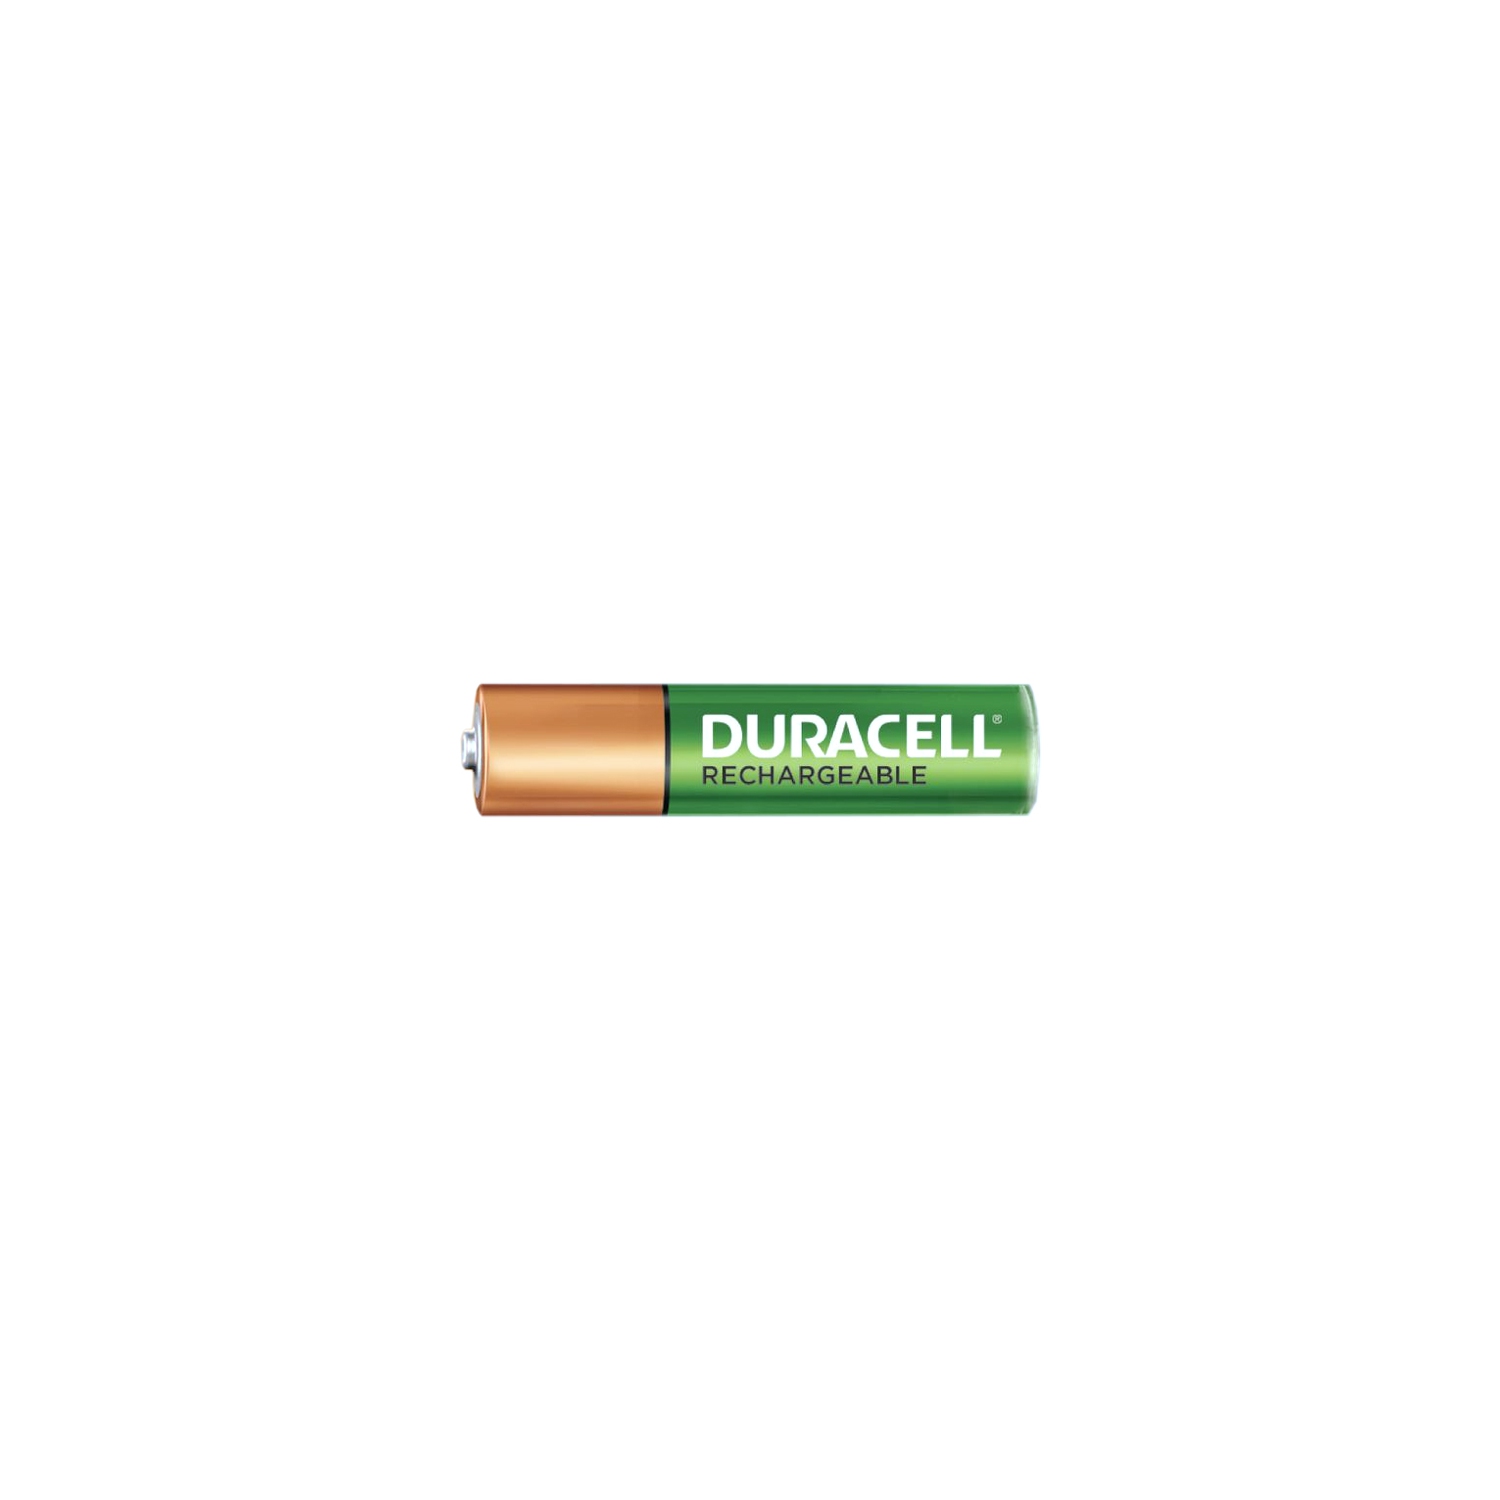 AAA Duracell (DX2400) NiMH 900 mAh Batteries (4 Card)